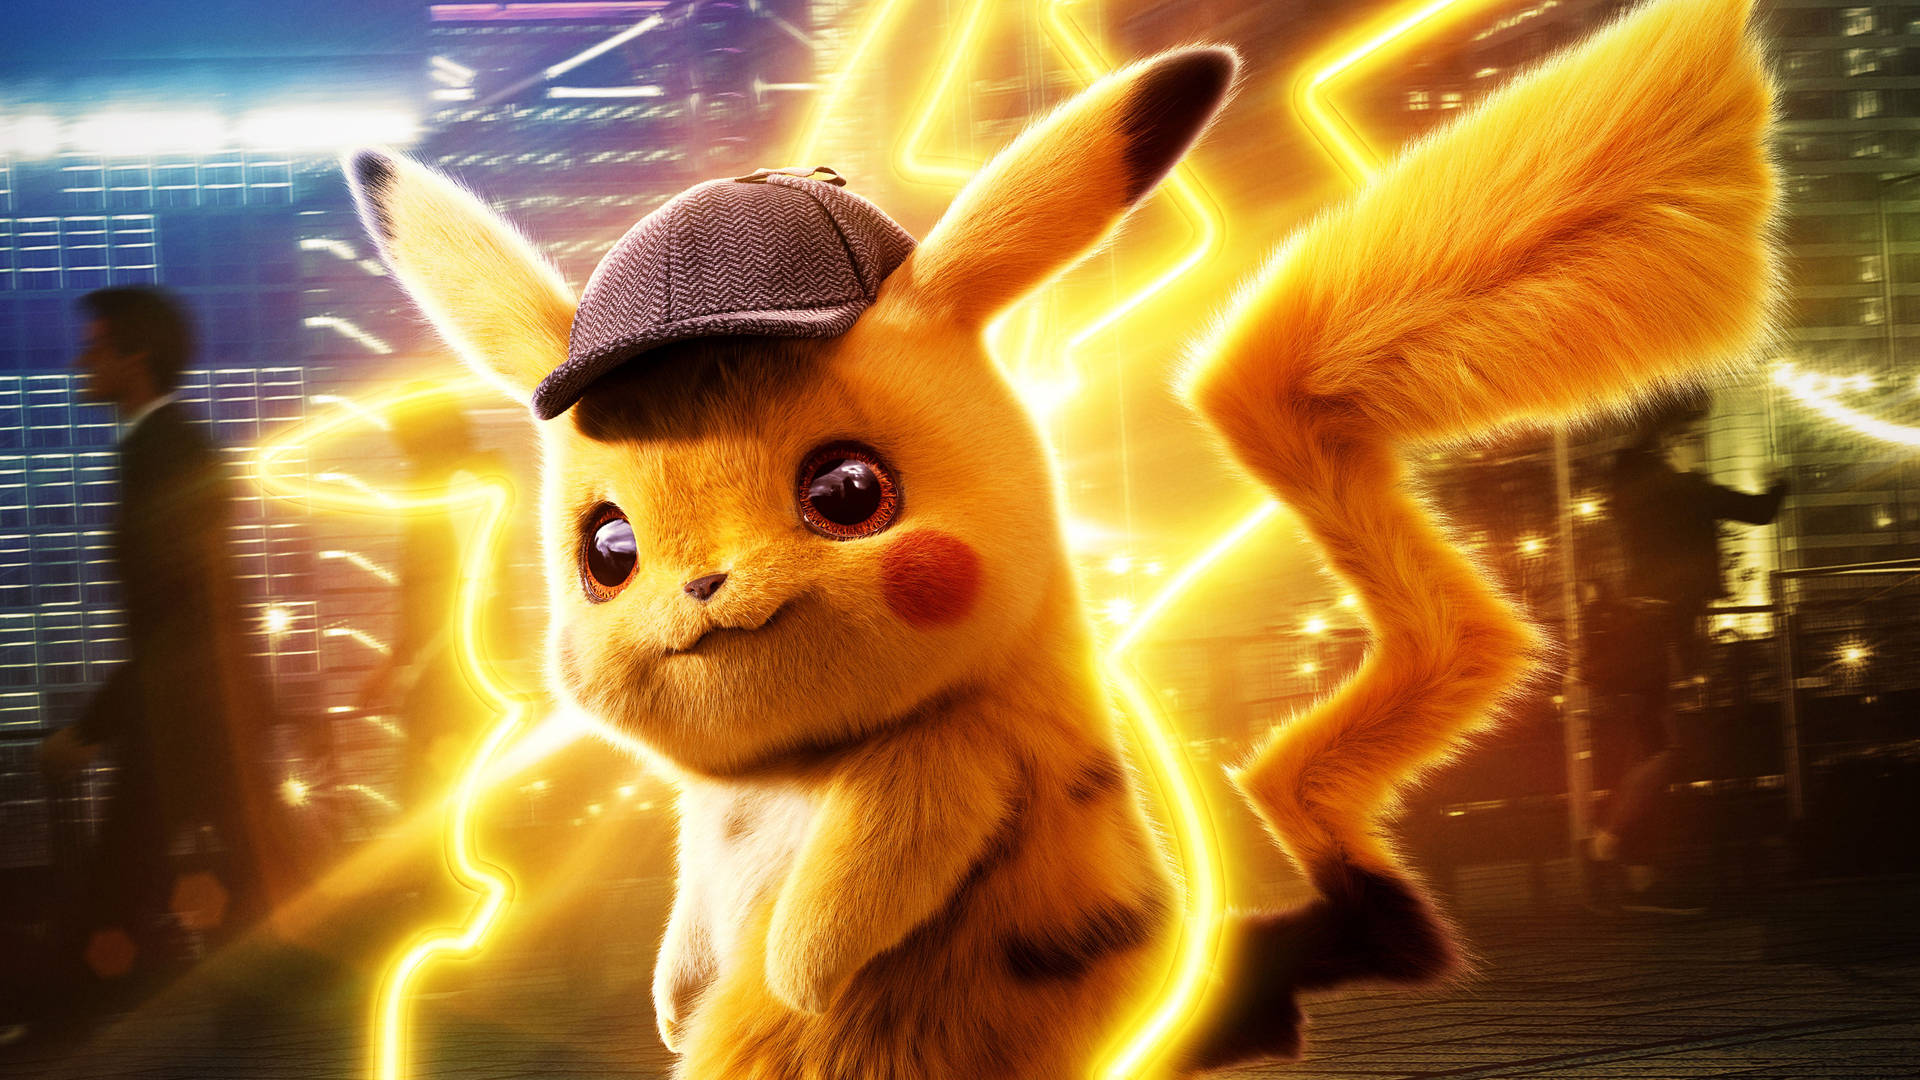 Pokémon Detective Pikachu Movie Poster Background